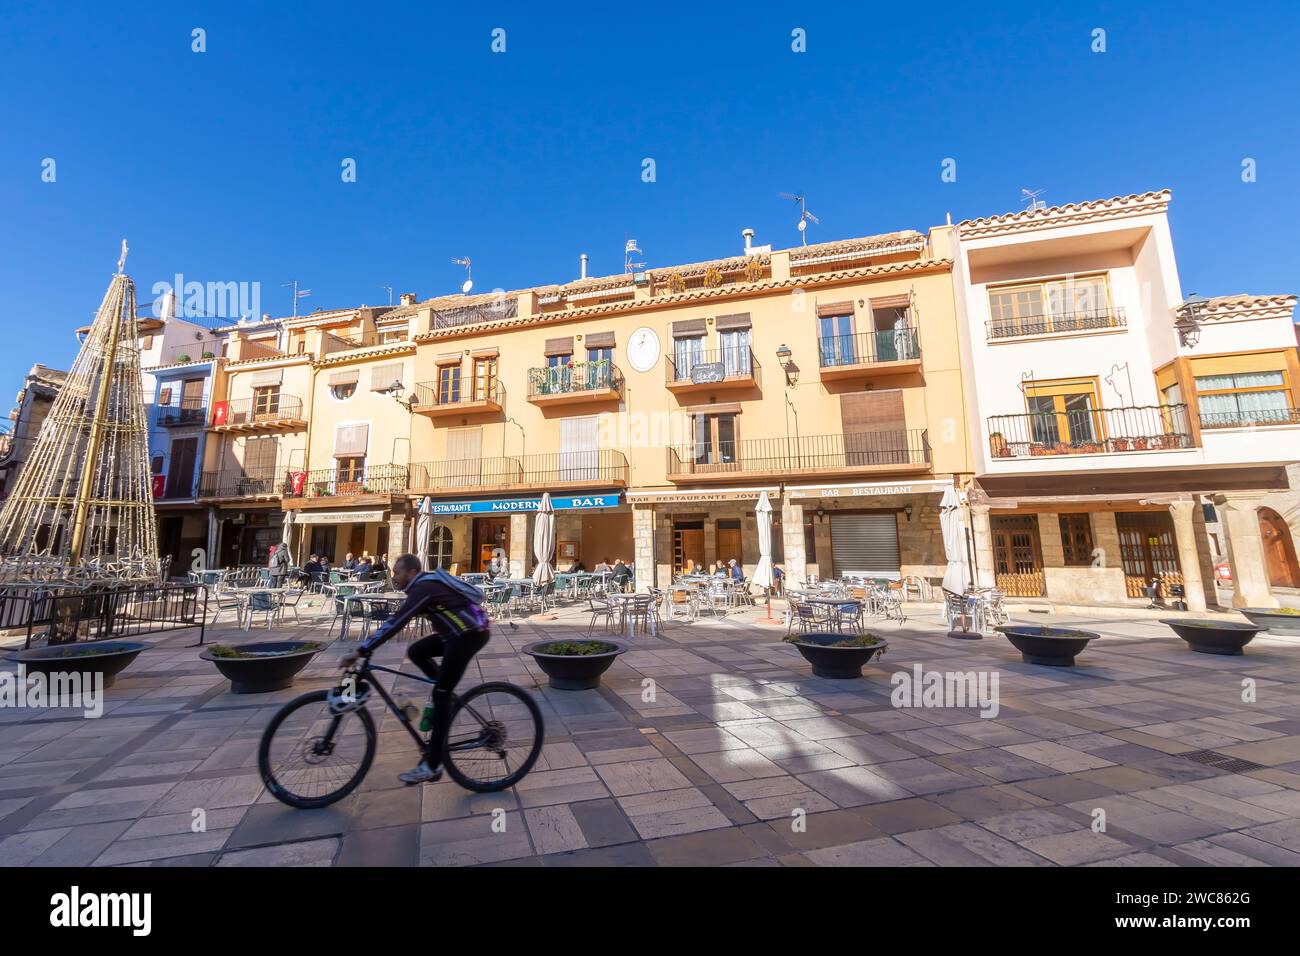 Plaza Mayor de Sant Mateu town in Castellon province, Spain. Stock Photo